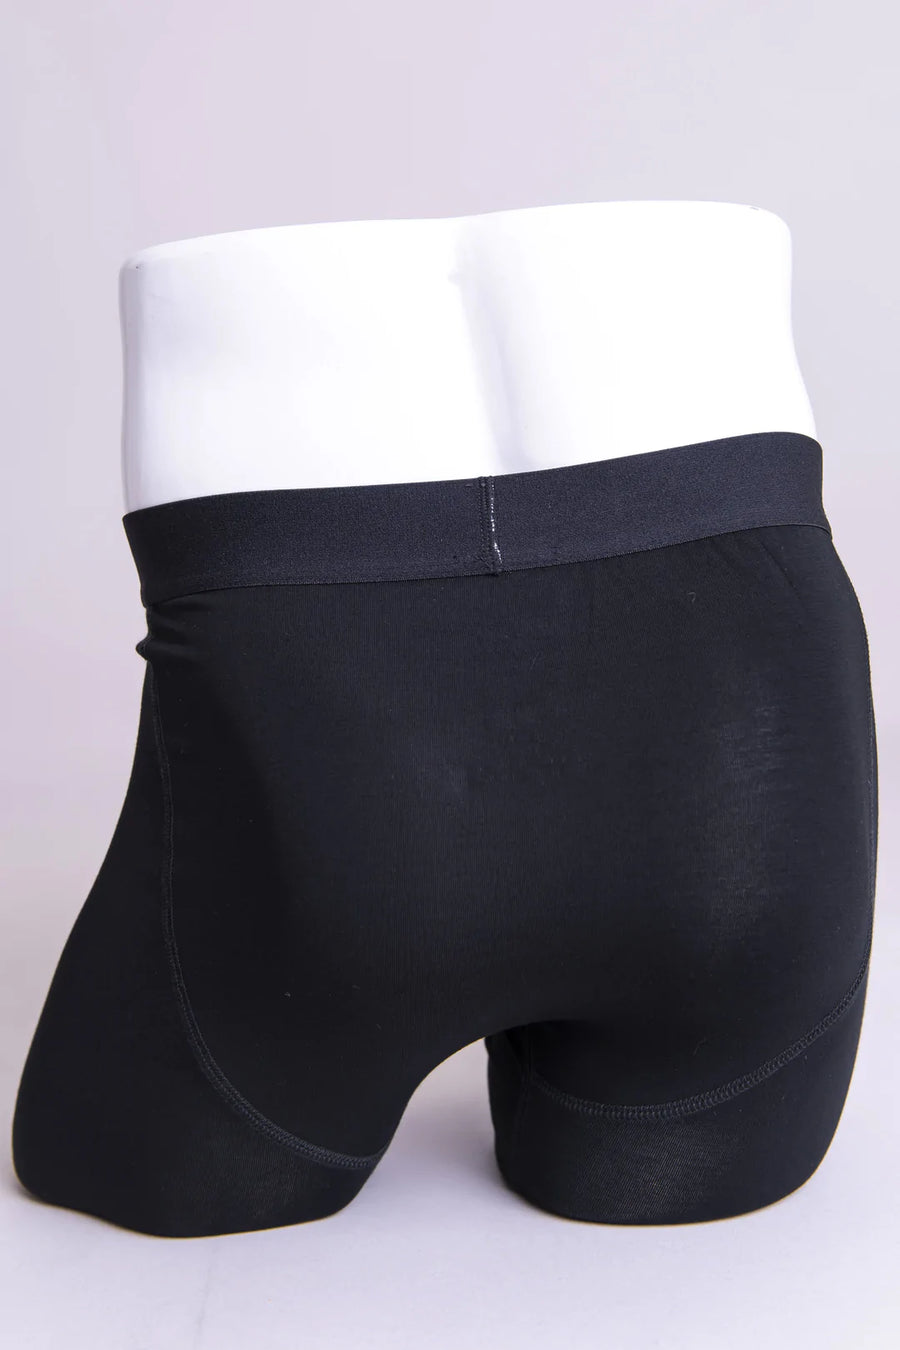 Middle Man Boxers/Underwear - Black